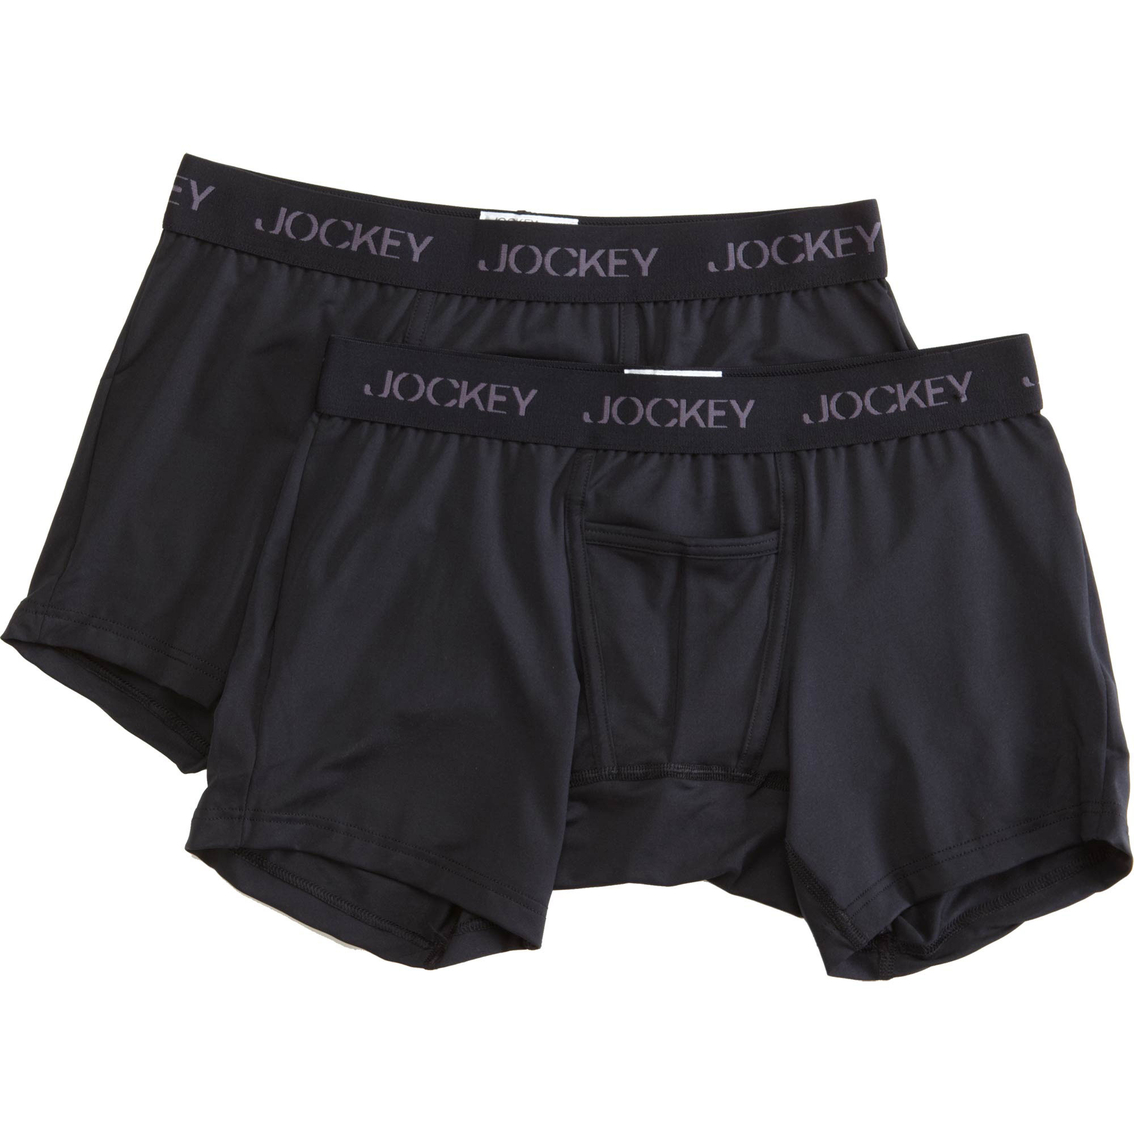 Jockey Sport Micro Boxer Briefs 2 Pk. | Underwear | Clothing ...